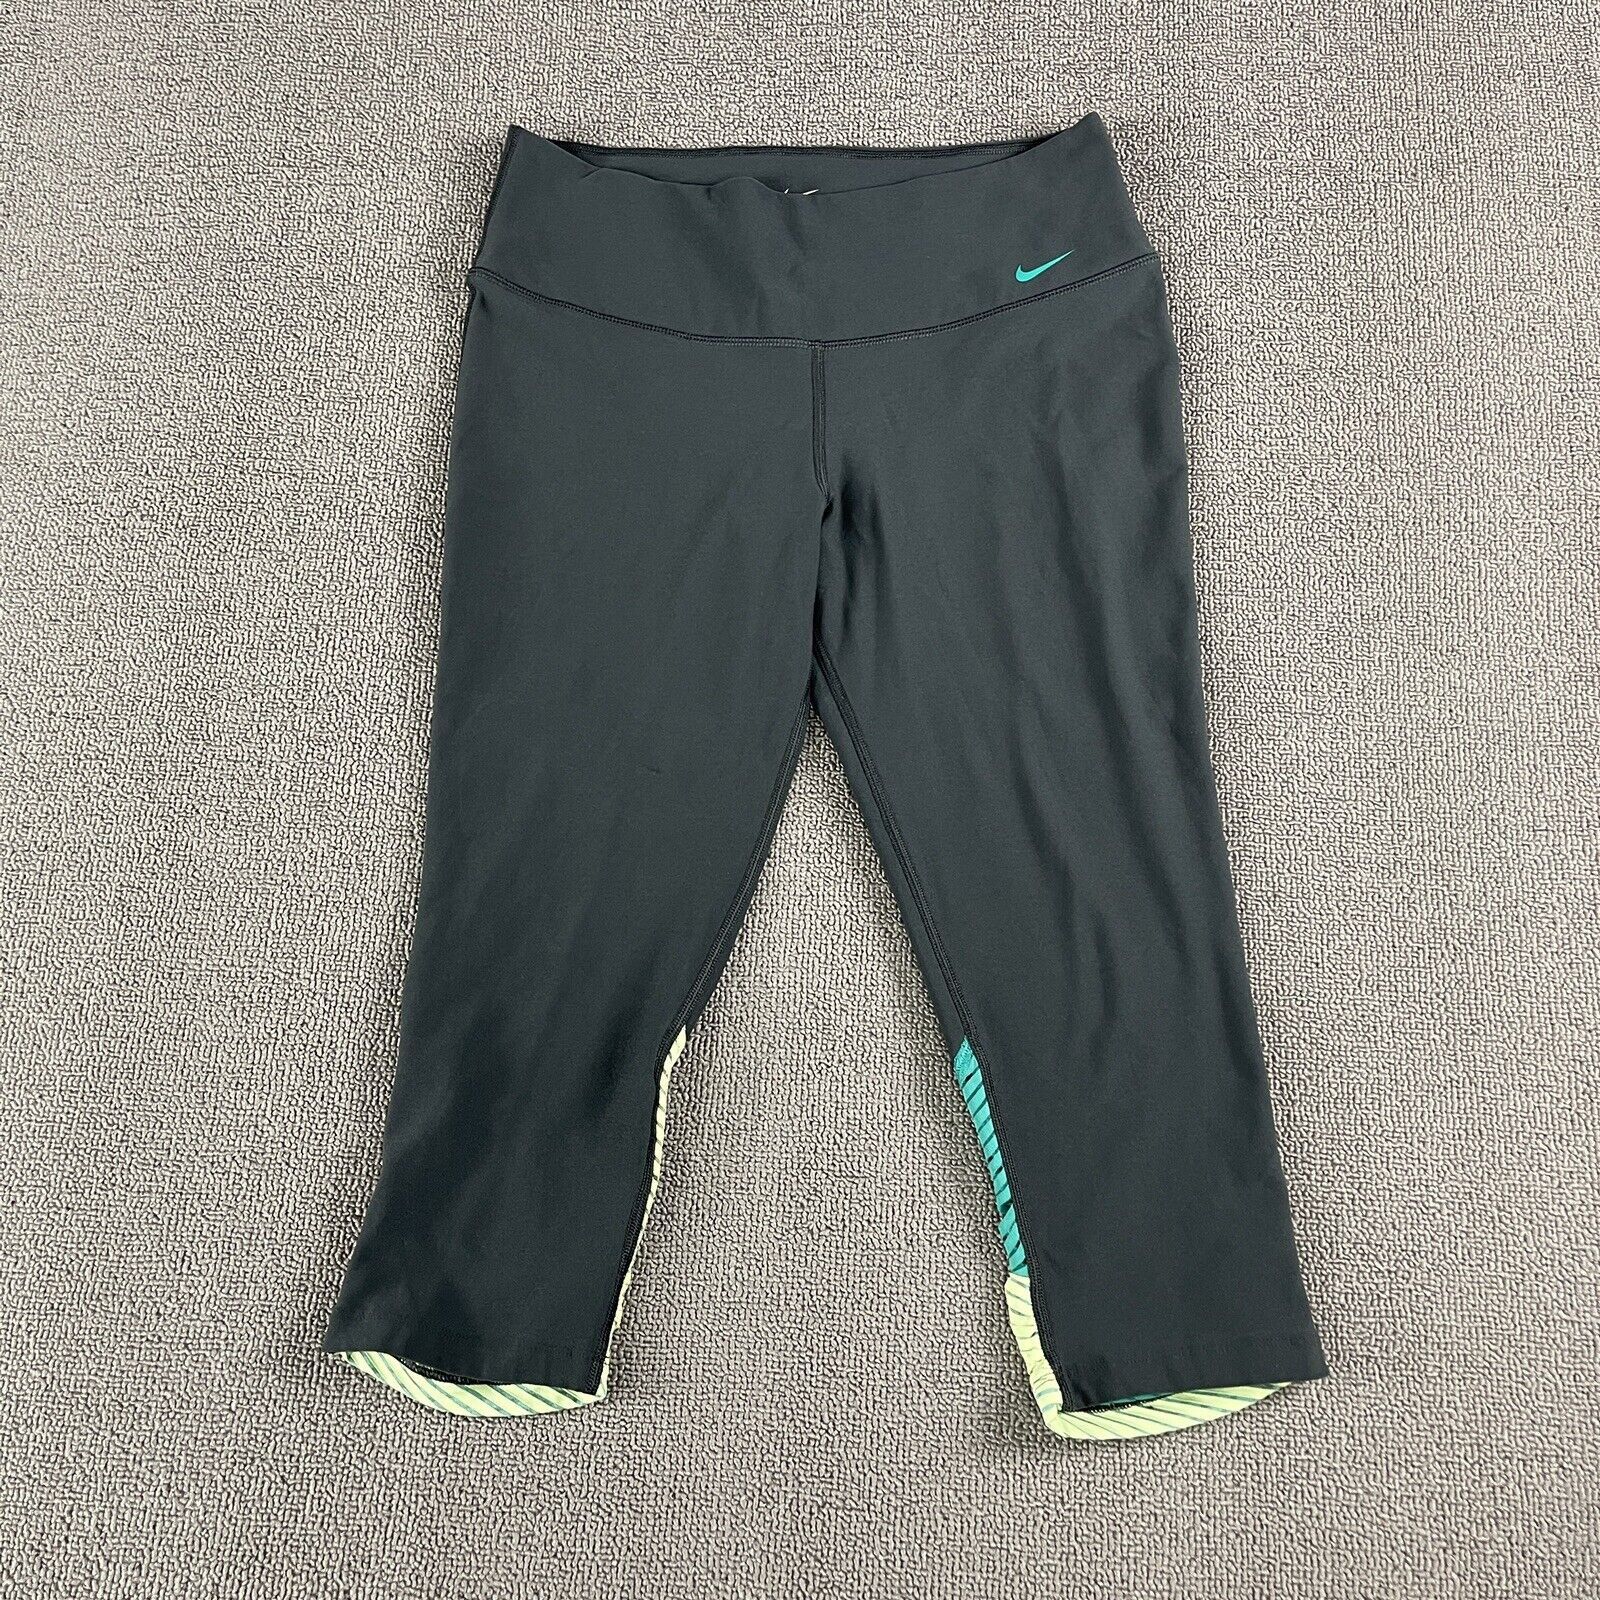 Nike Nike Gray Leopard Print Leggings High Rise Small